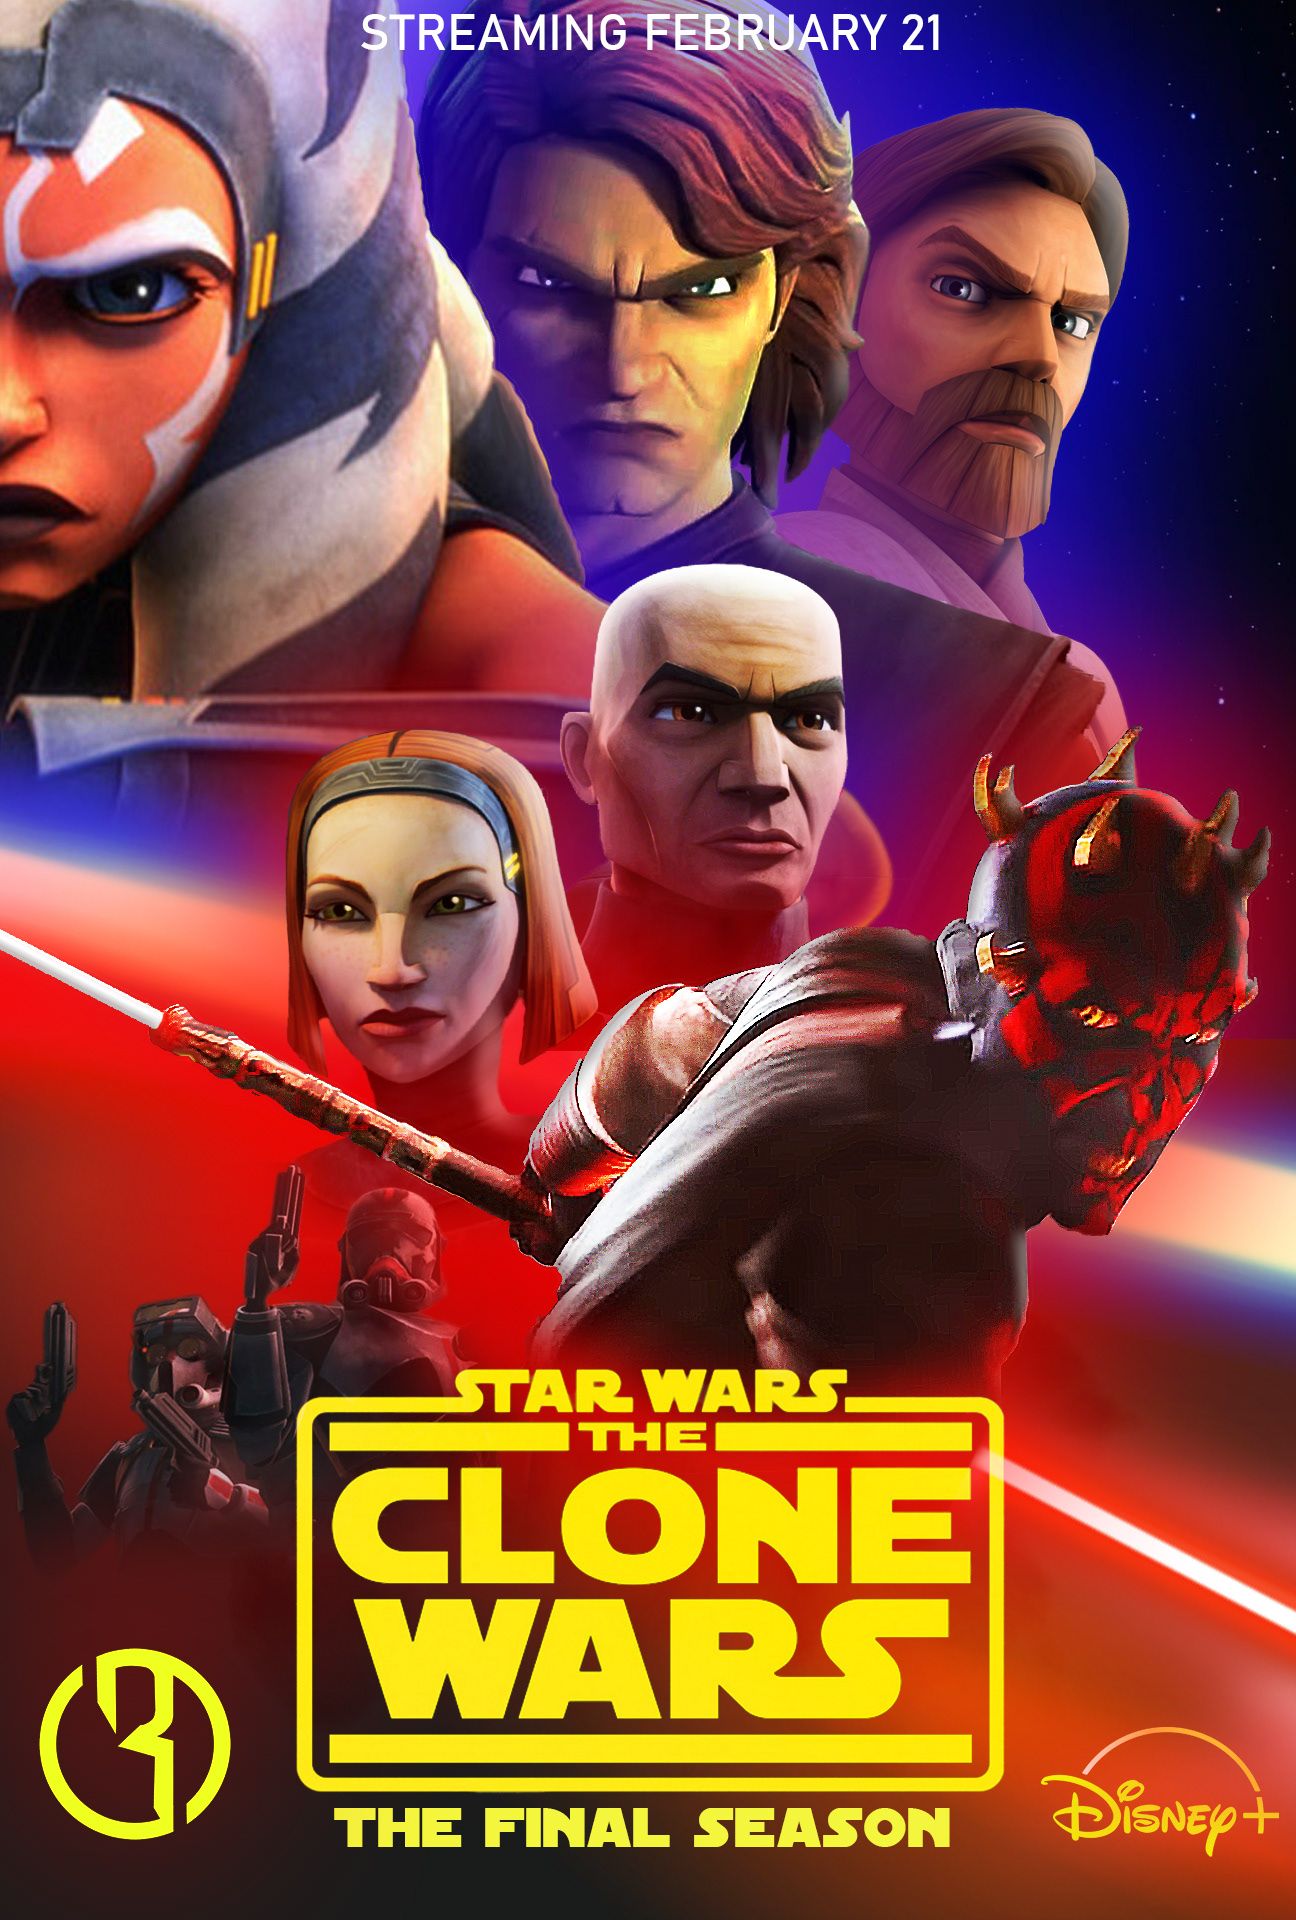 Star Wars The Clone Wars Season 7 poster reedited